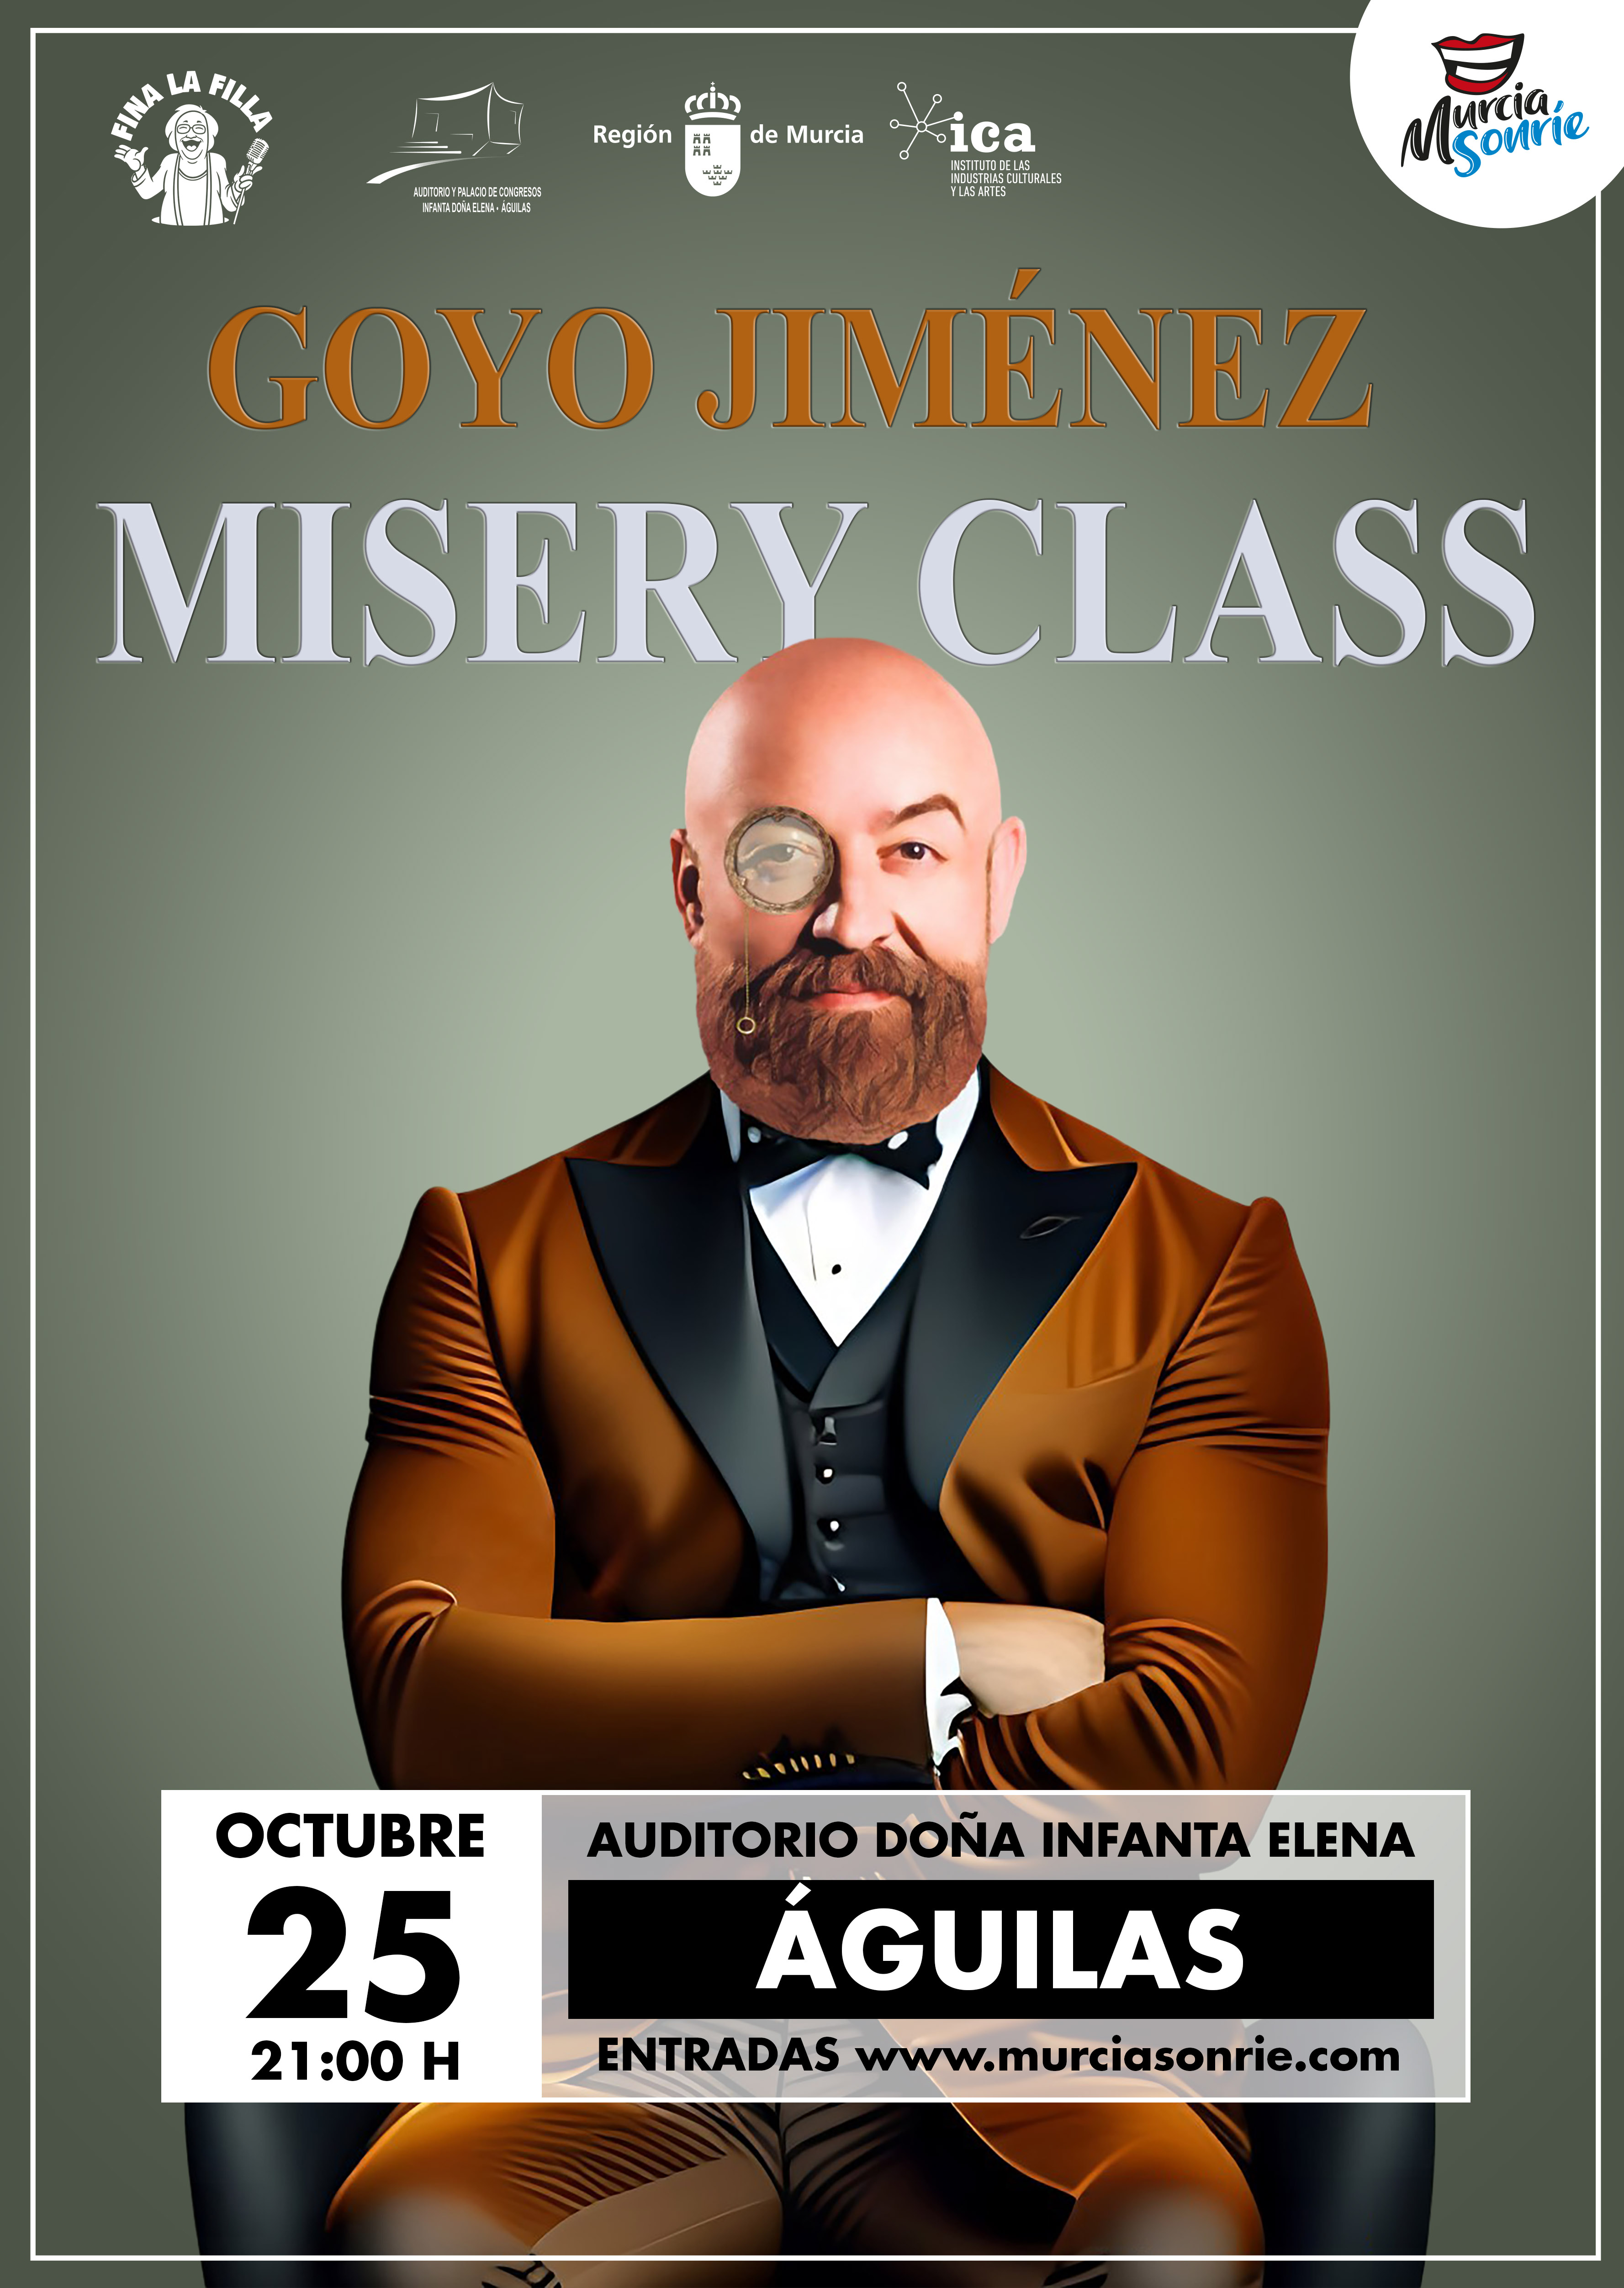 GOYO JIMNEZ MISERY CLASS